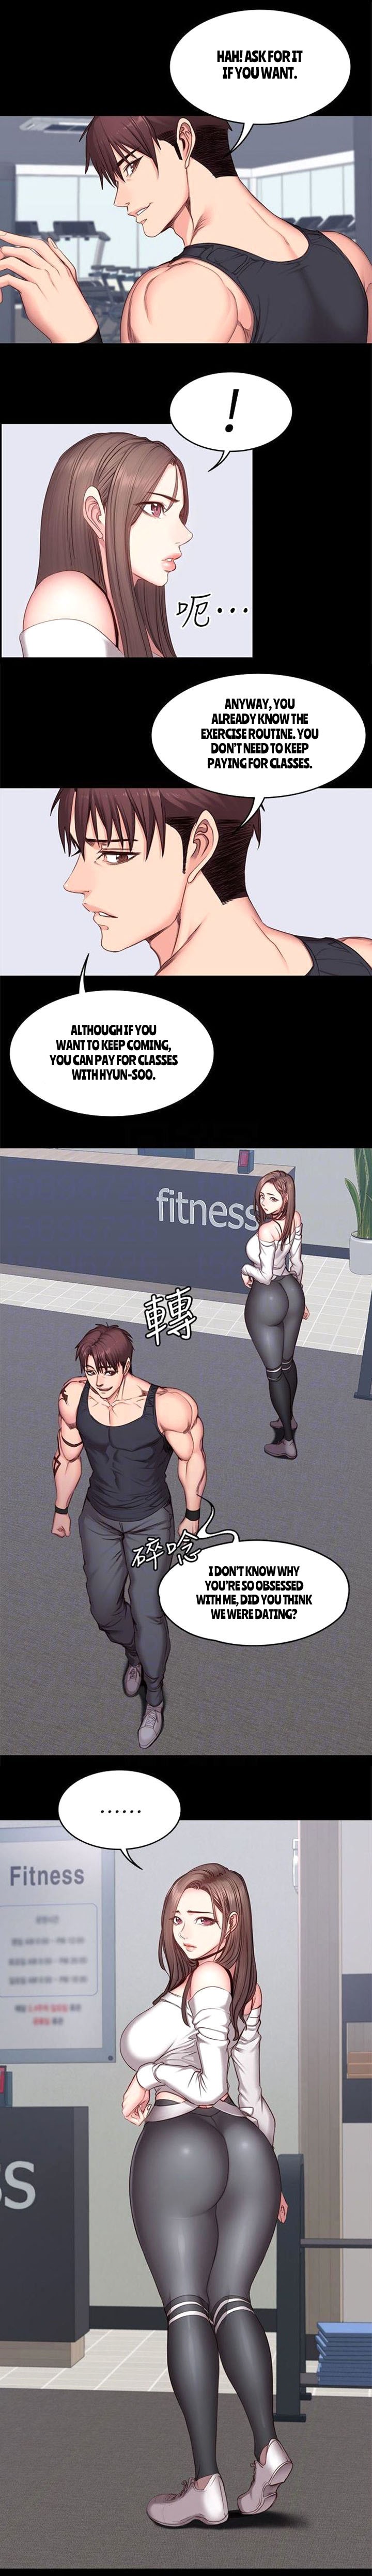 Fitness image